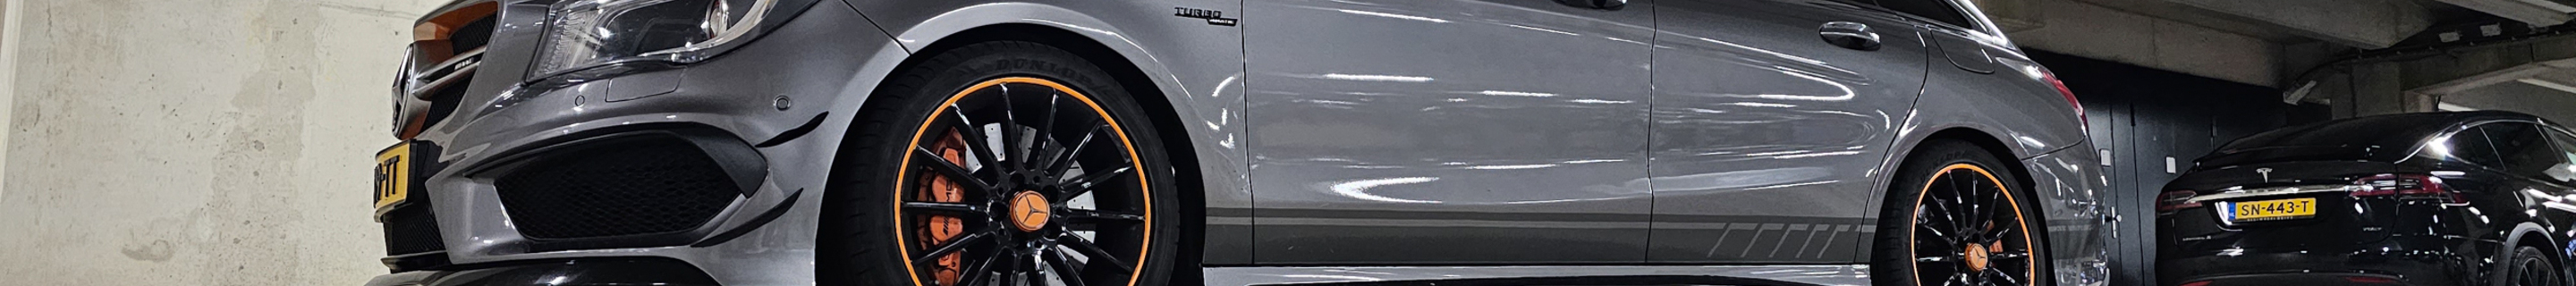 Mercedes-AMG CLA 45 Shooting Brake OrangeArt Edition